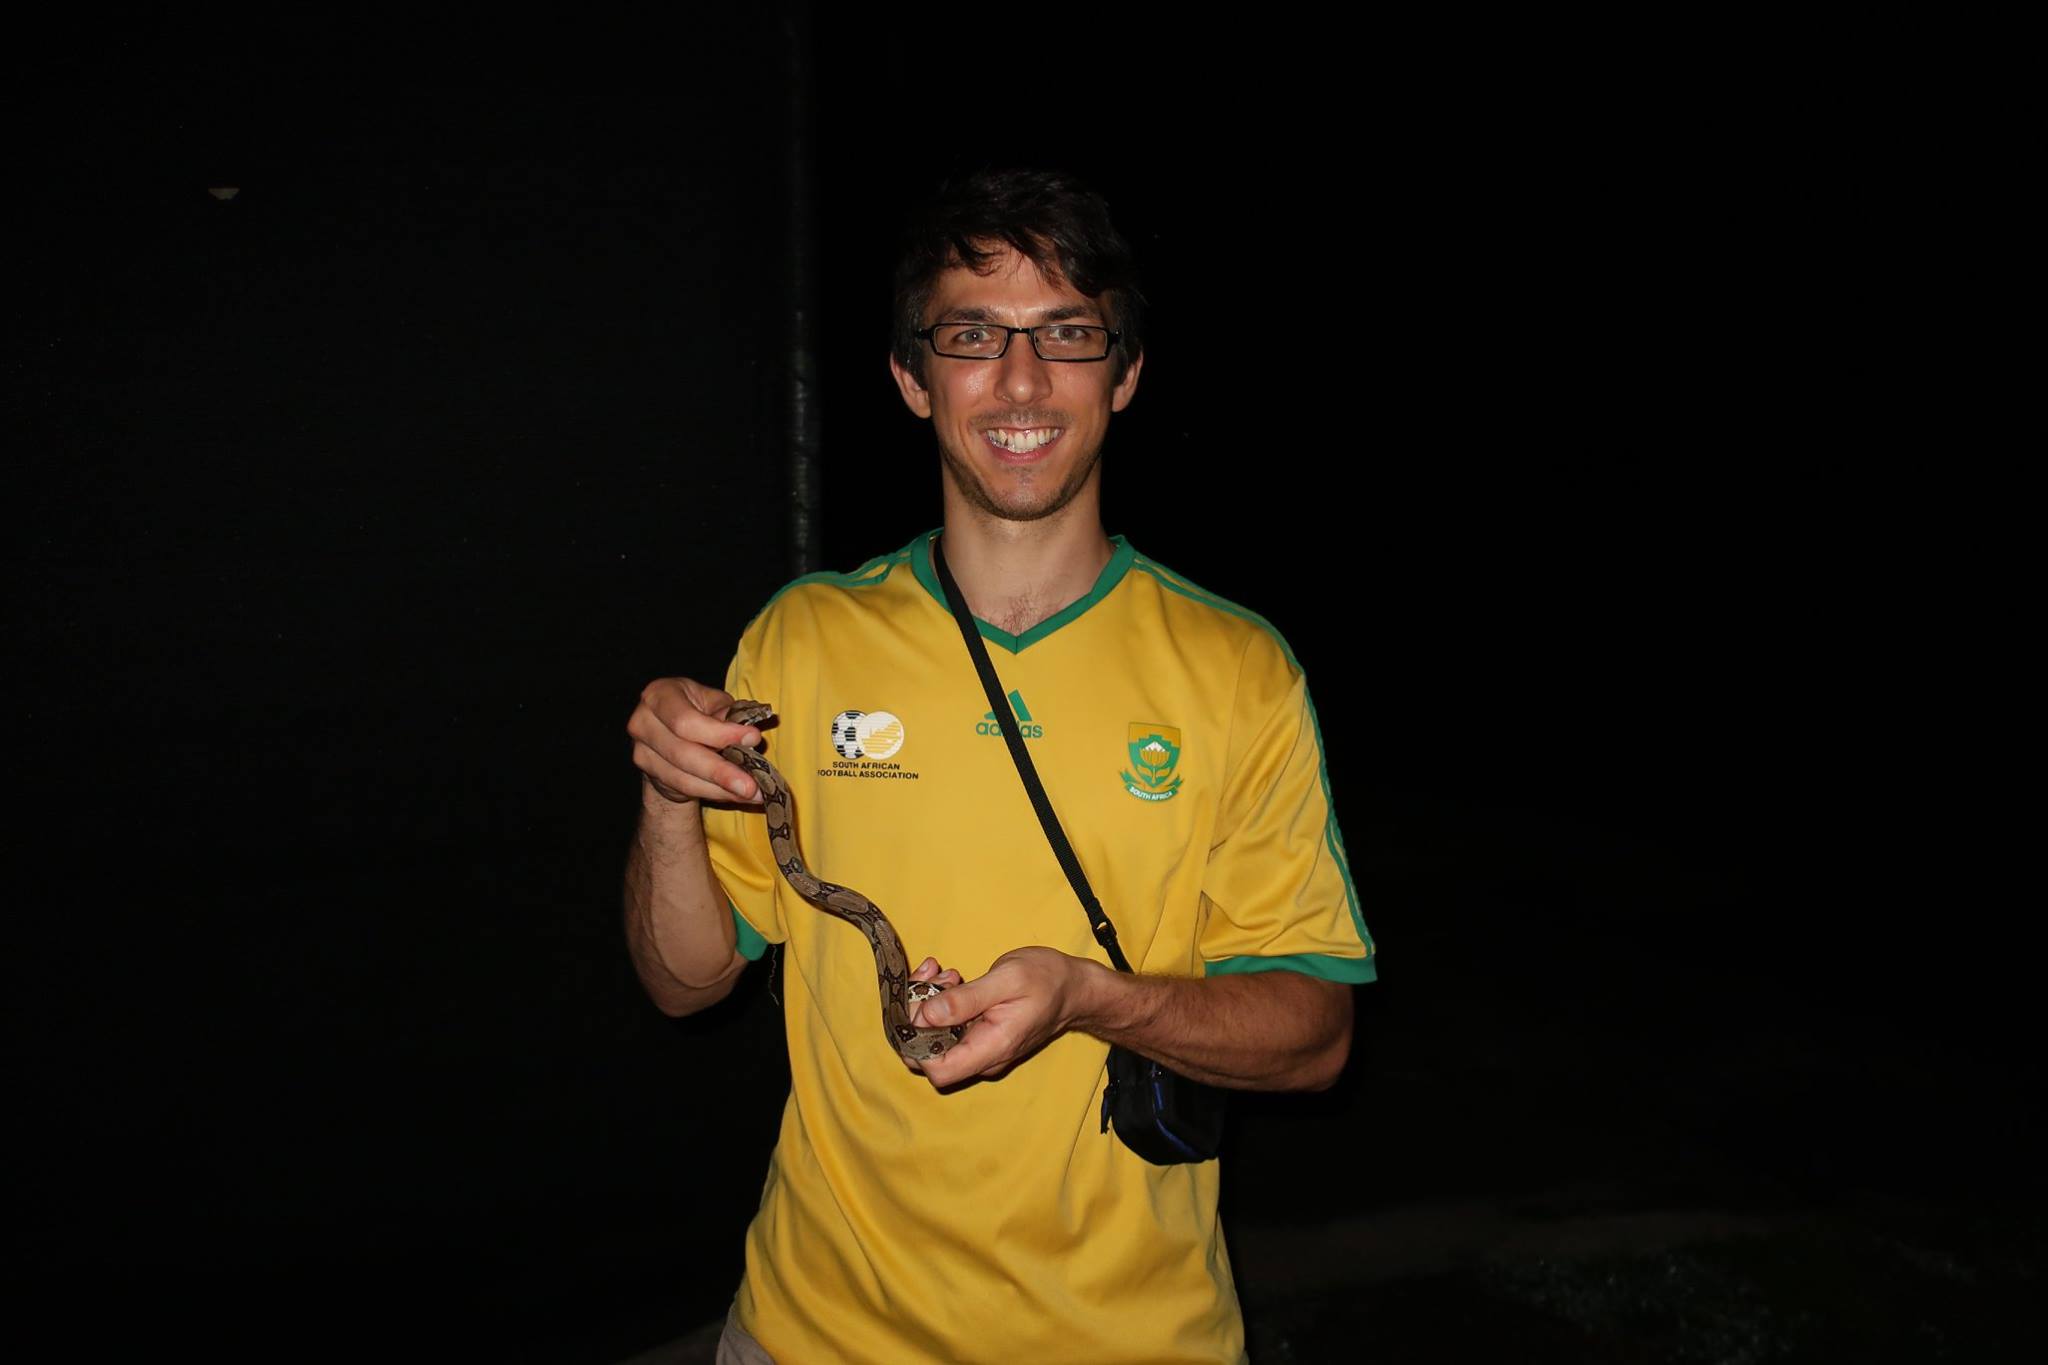 Profile image: man holding a snake